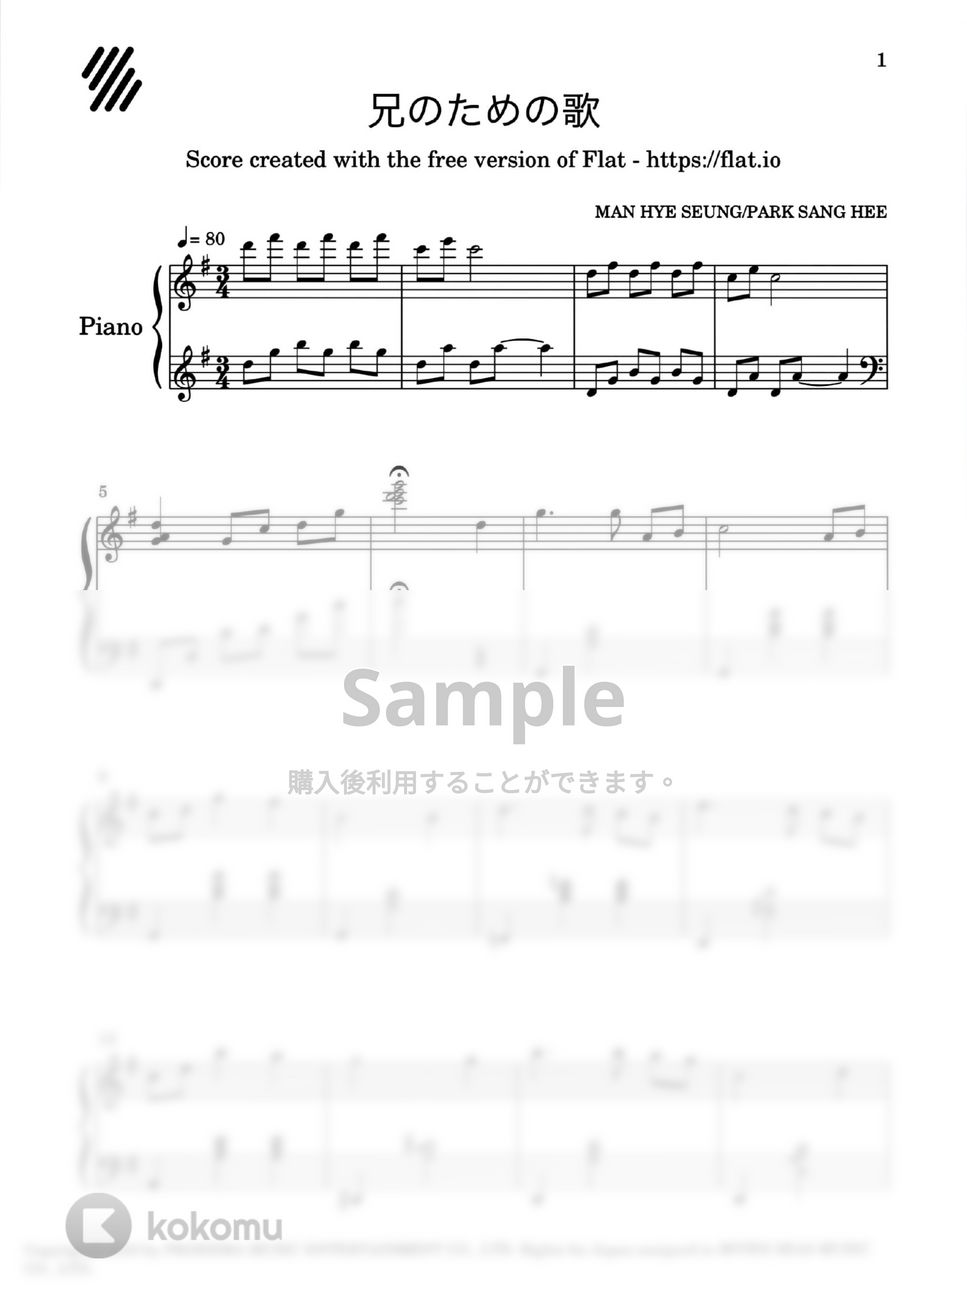 NAM HYE SEUNG,PARK SANG HEE - 兄のための歌 feat. リジョンヒョク (愛の不時着より) by Piano diary of  mari